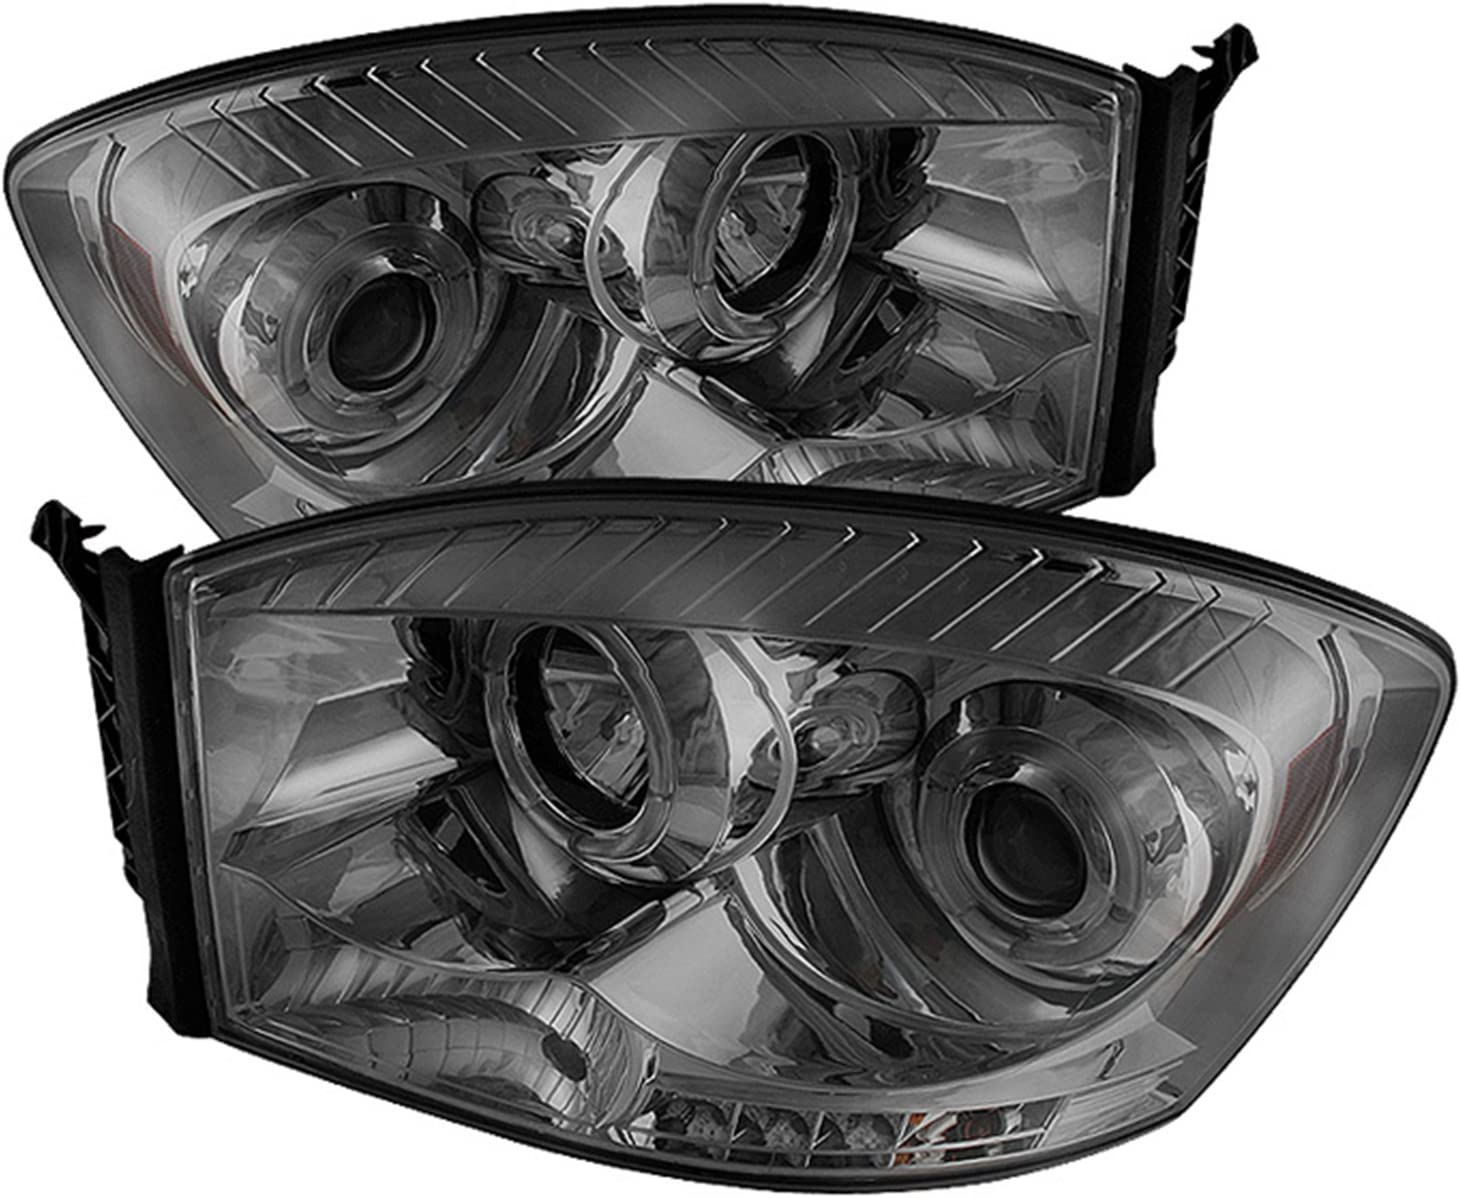 Spyder Auto 444-DR06-HL-SM Projector Headlight